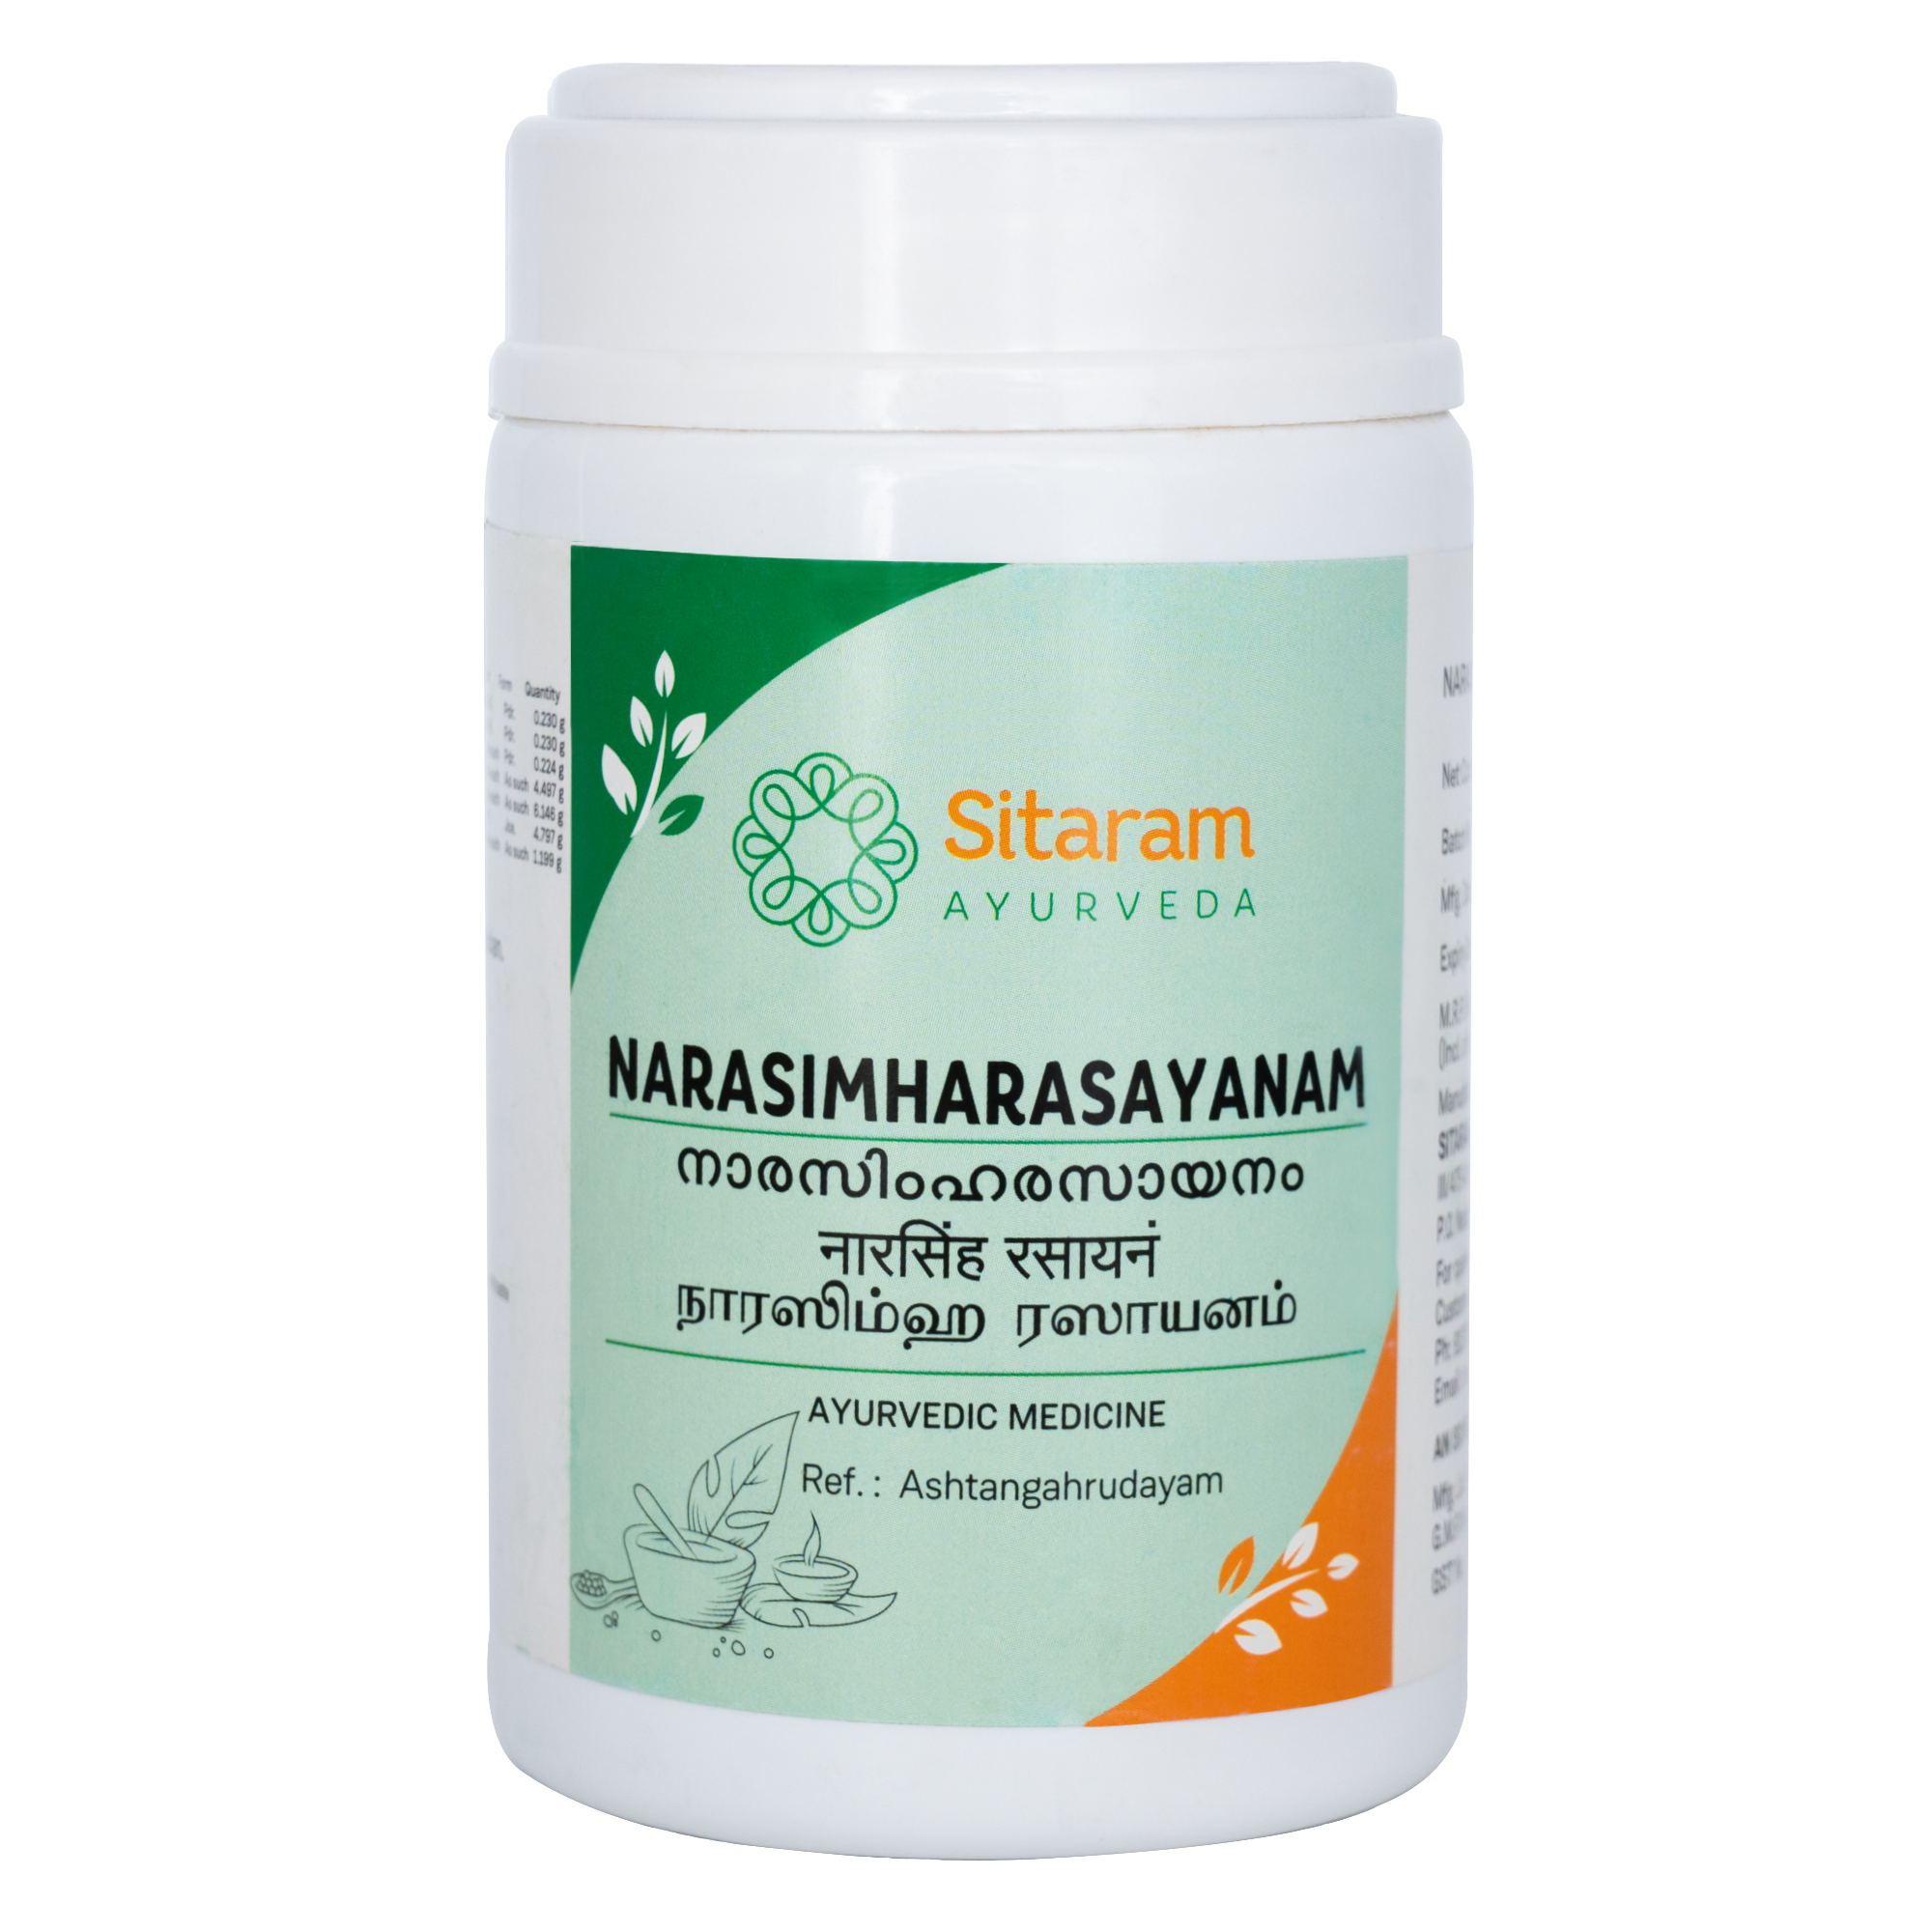 Sitaram Ayurveda Narasimha Rasayanam 250Gm (Prescription Medication)